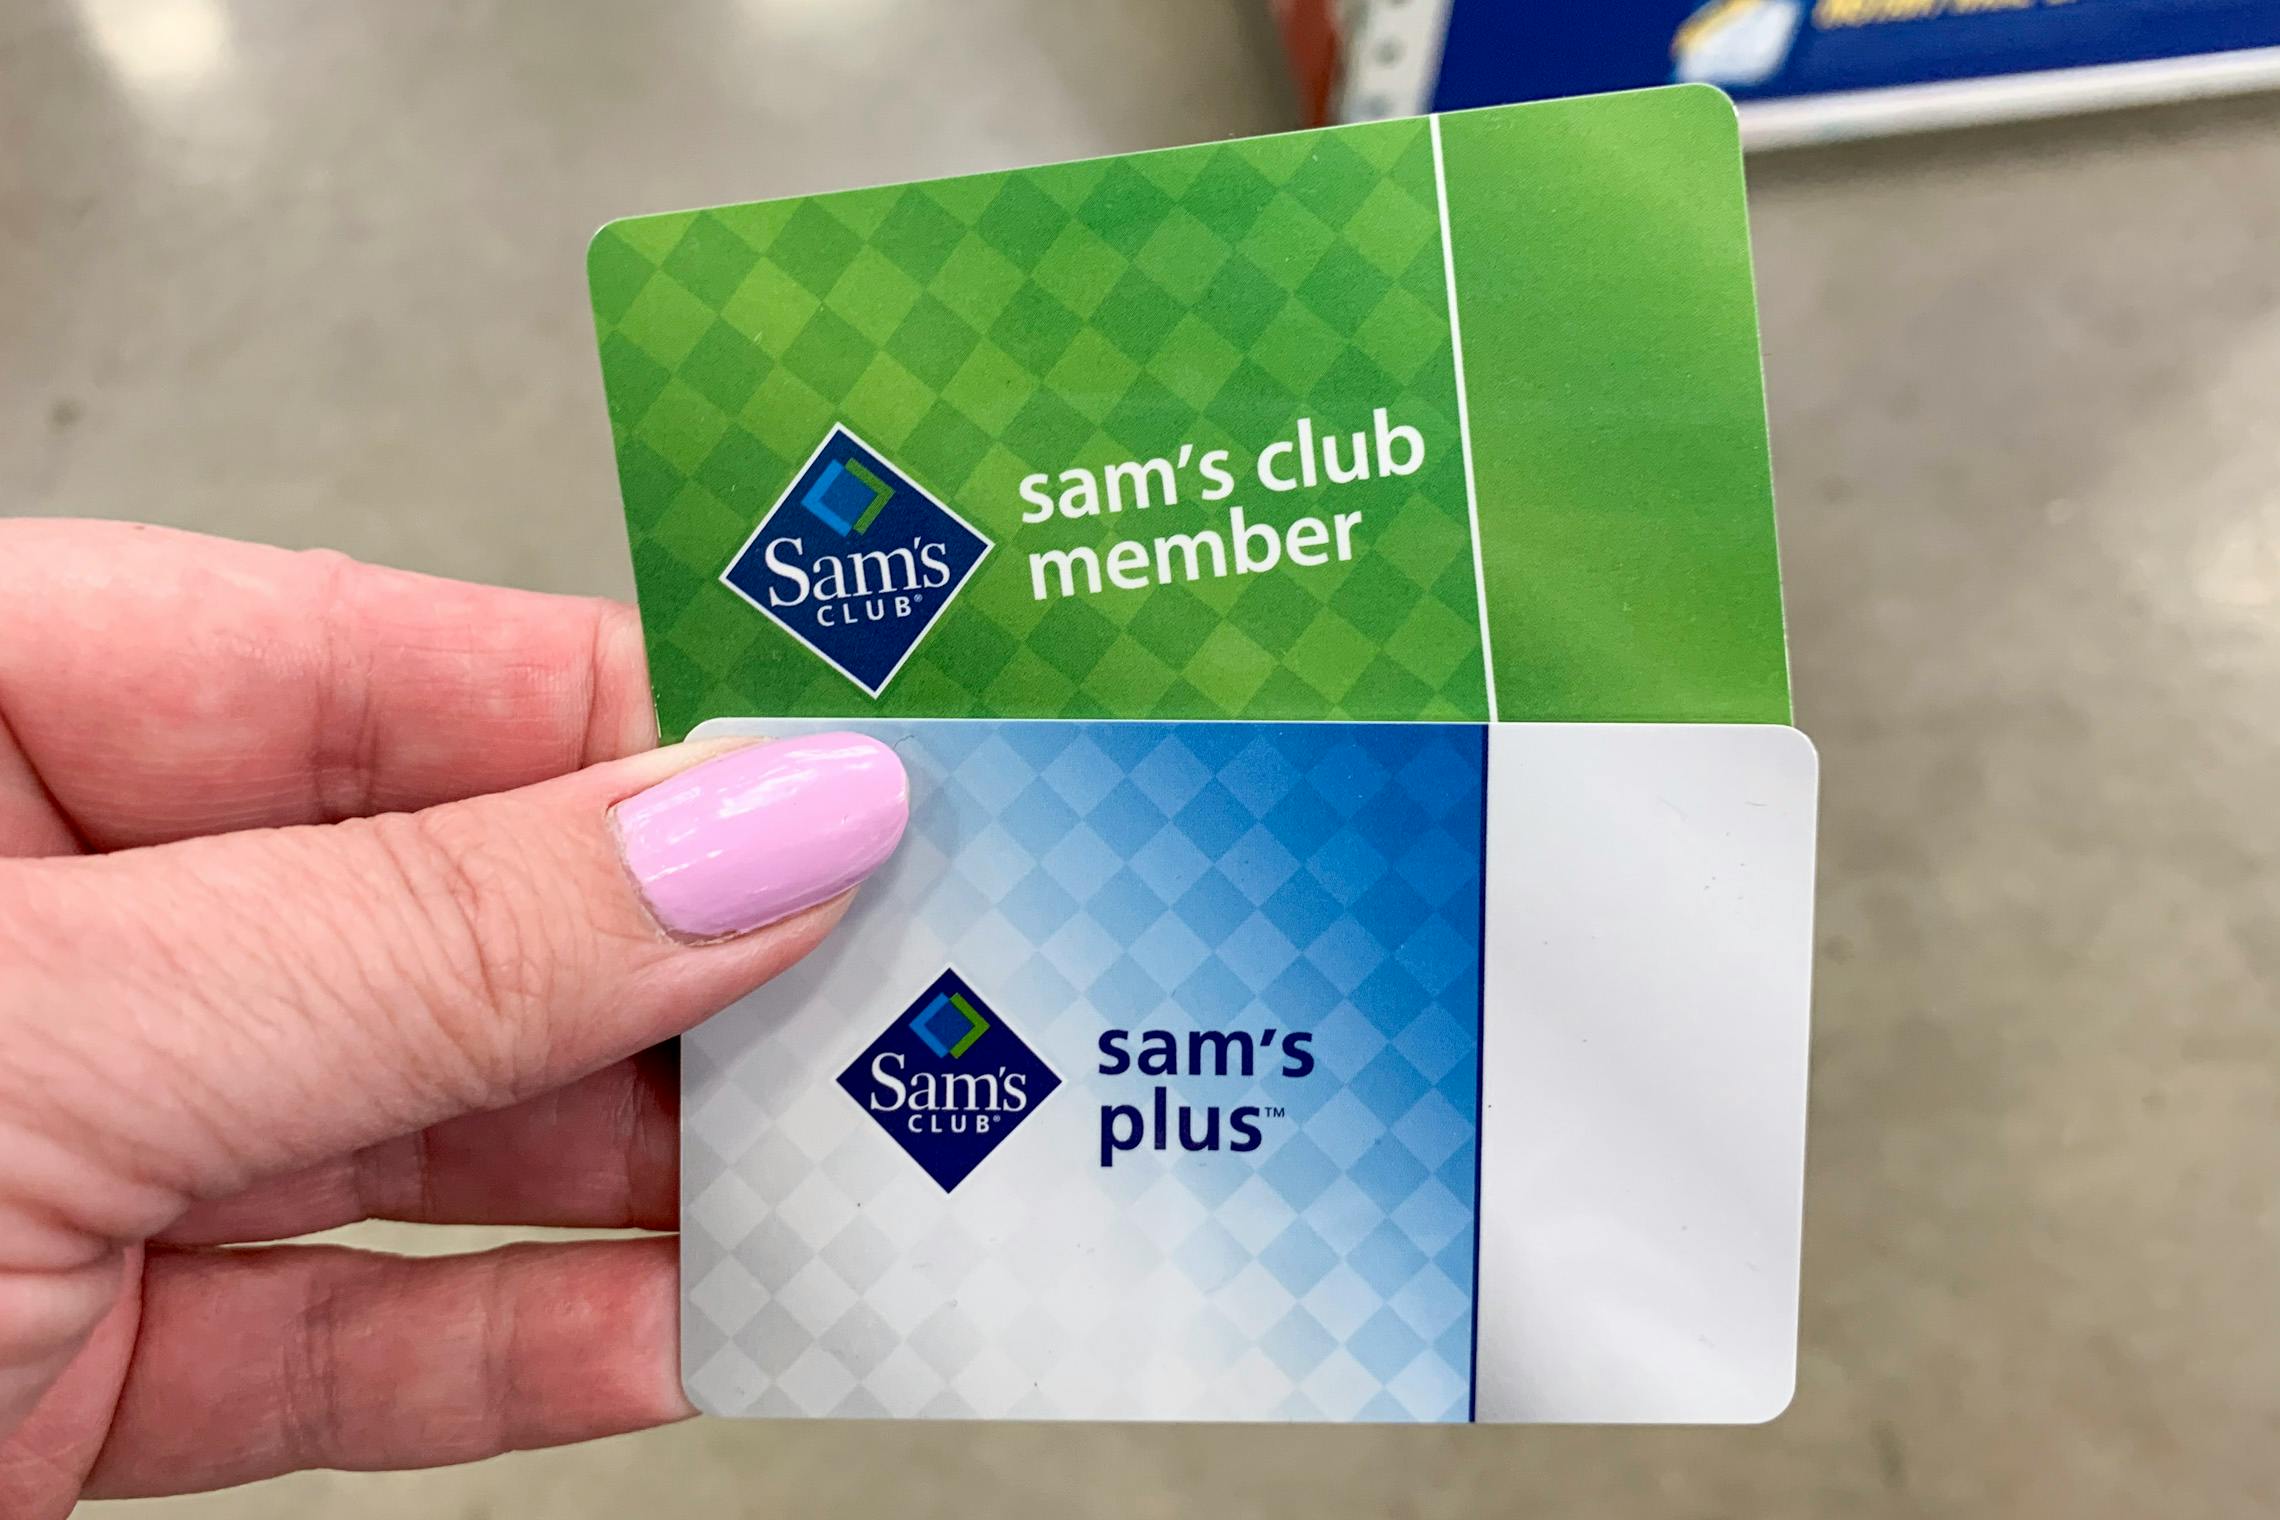 sams club gift card 02 2020 1601925222 1601925222